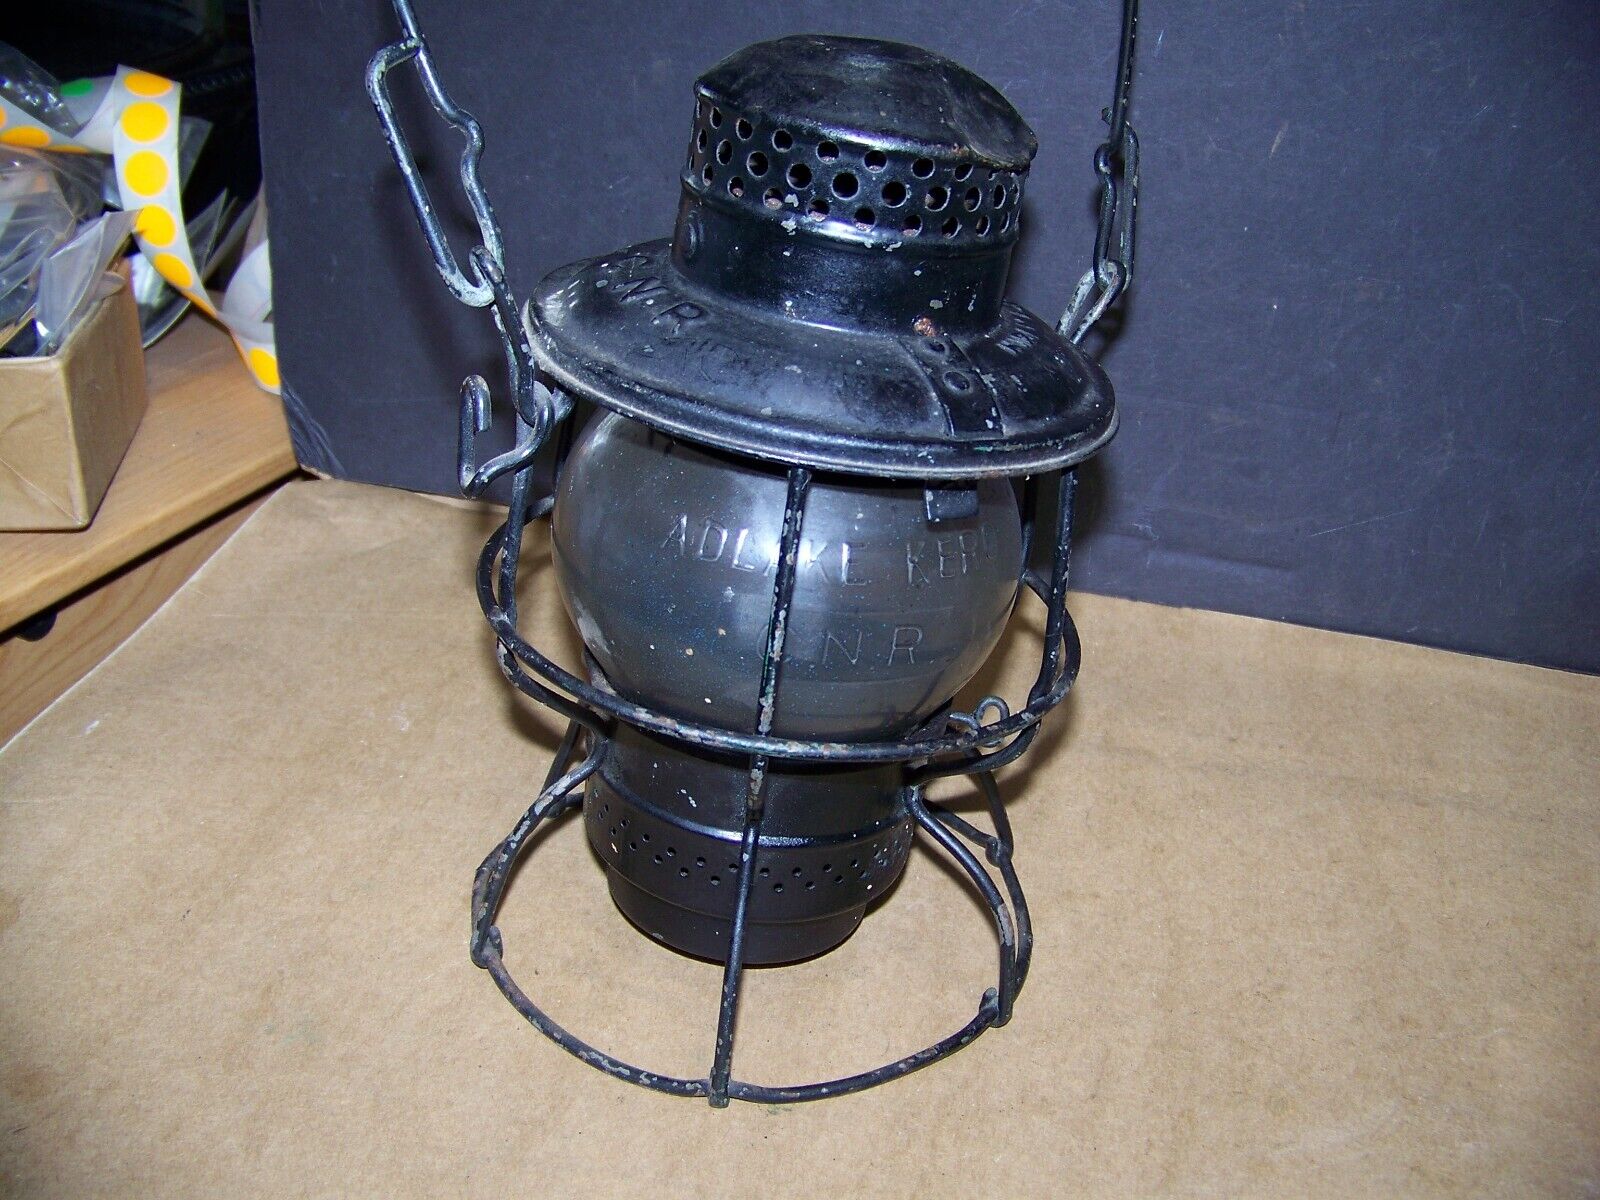 The Hiram L. Piper CO LTD by ADLAKE 3-56 C N R Railroad Lantern embossed Globe